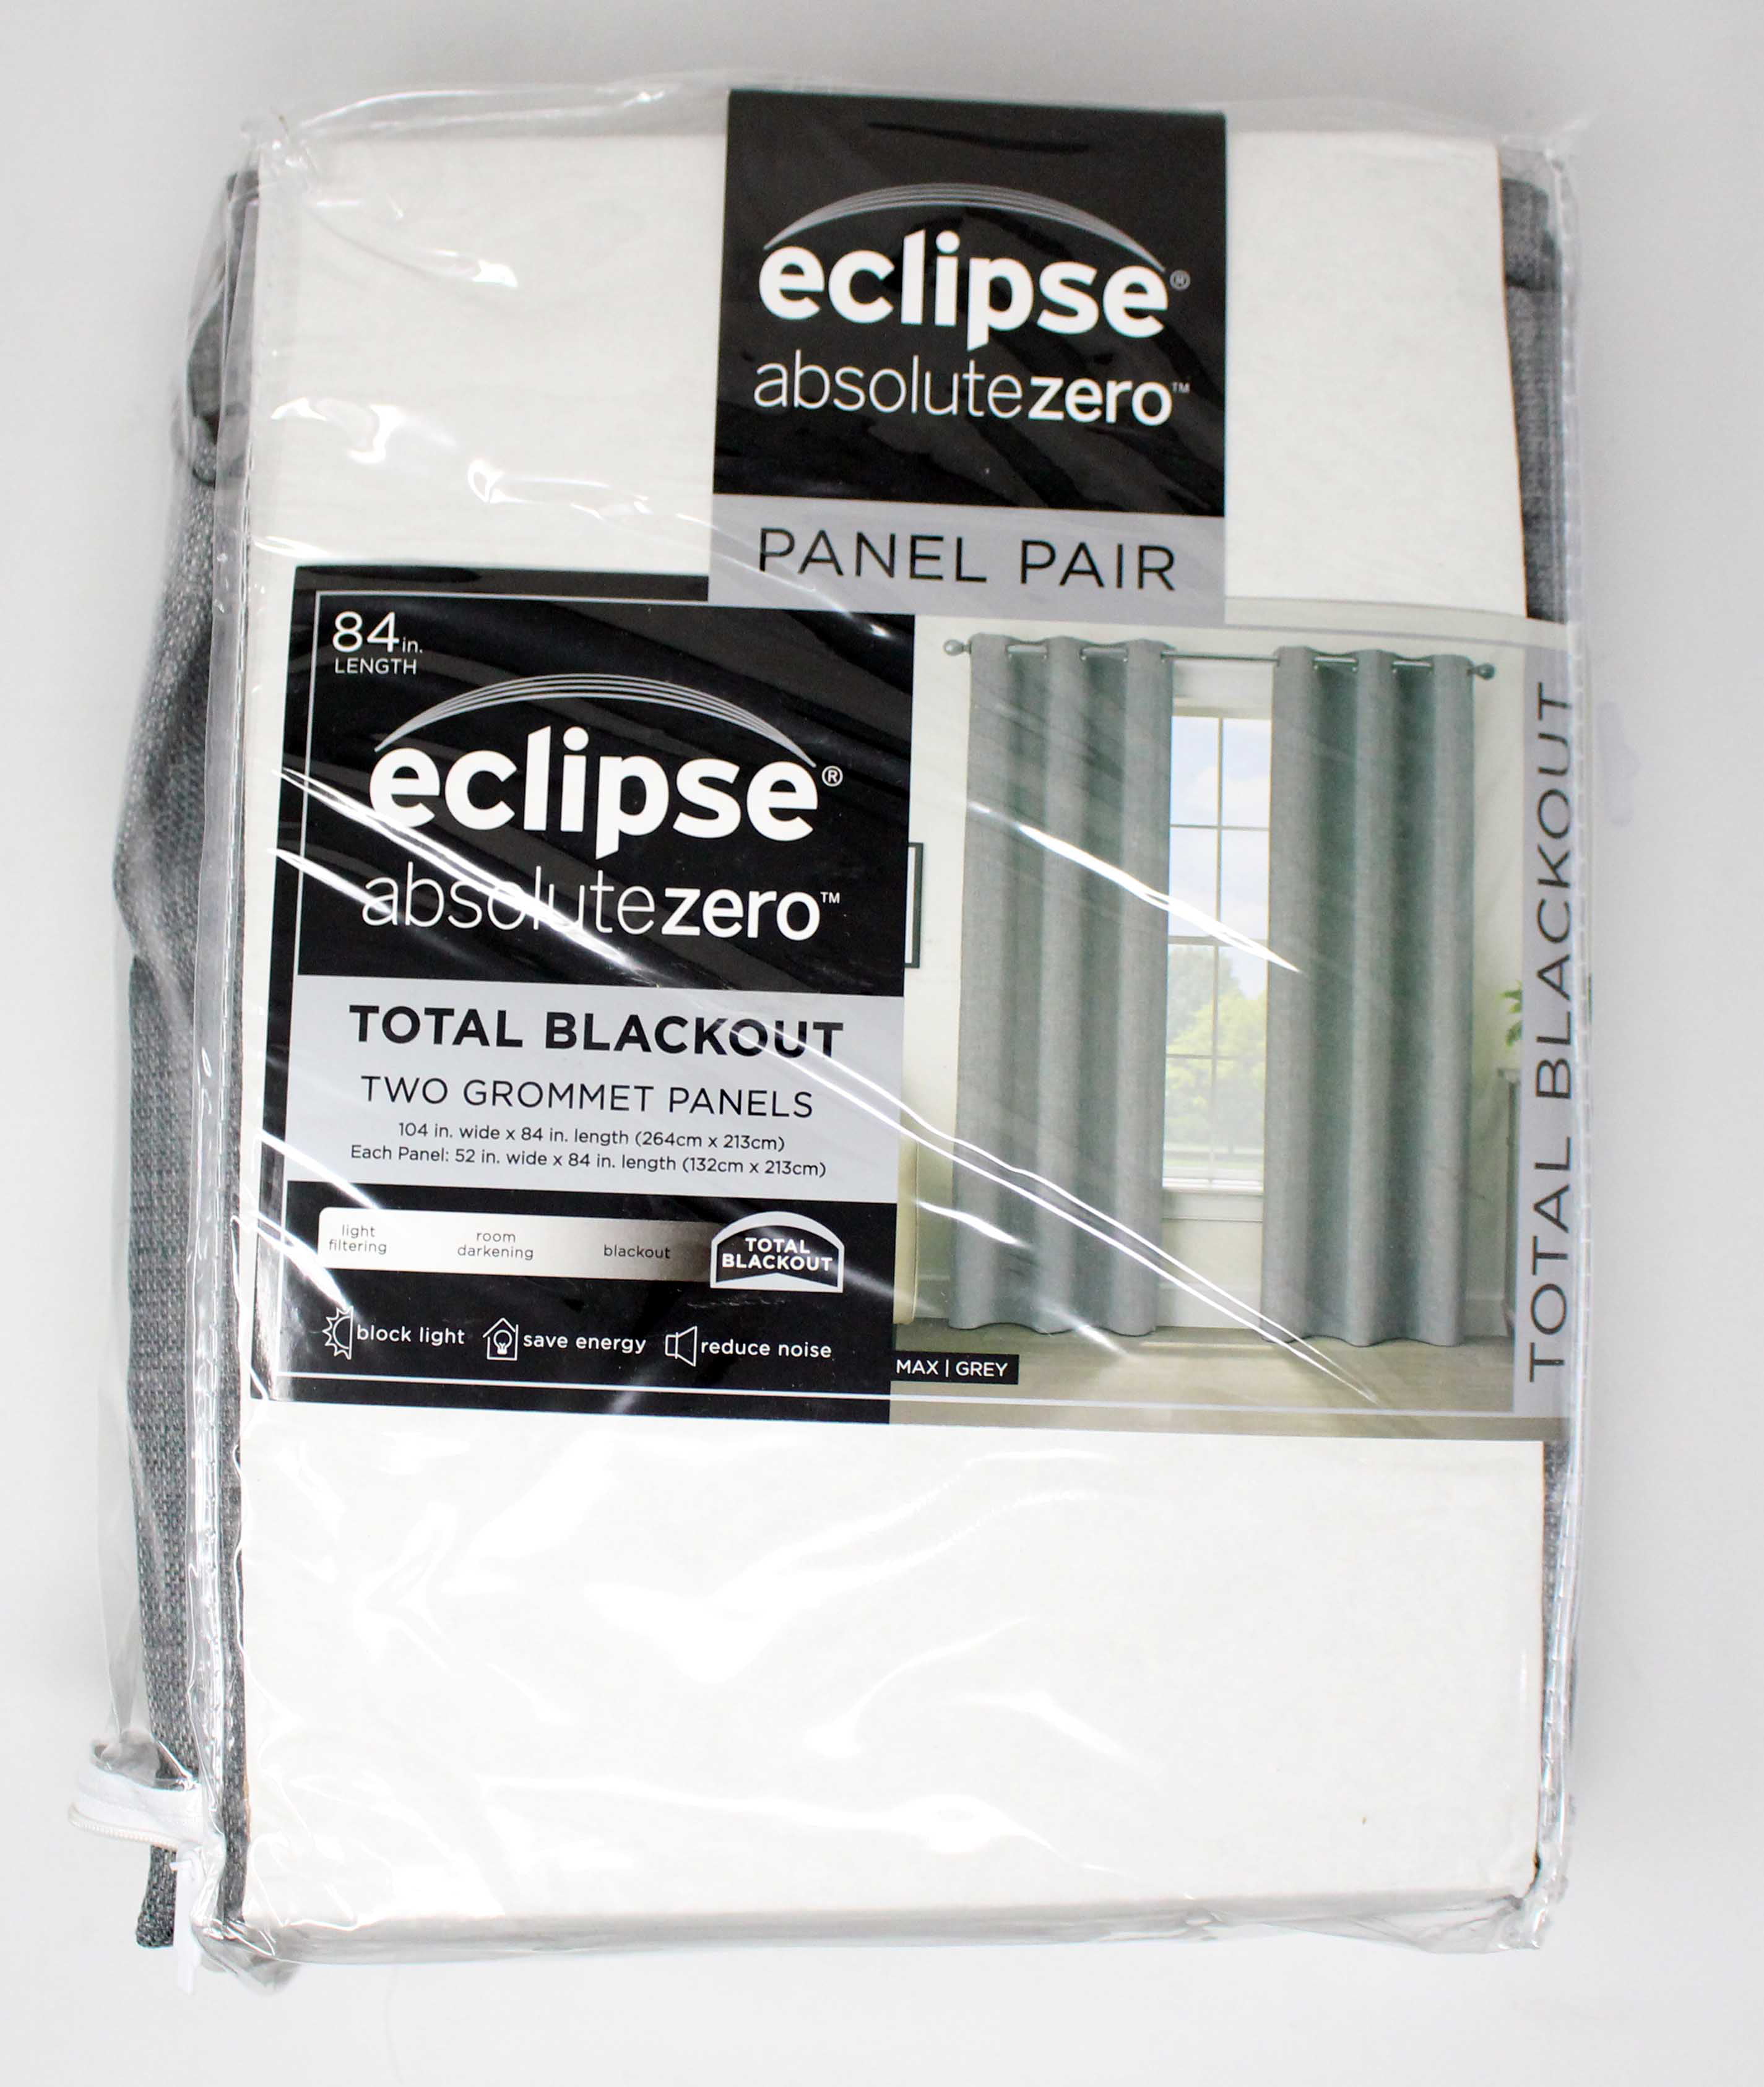 Eclipse Absolute Zero Panel Pair In Max Grey - Walmart.com - Walmart.com